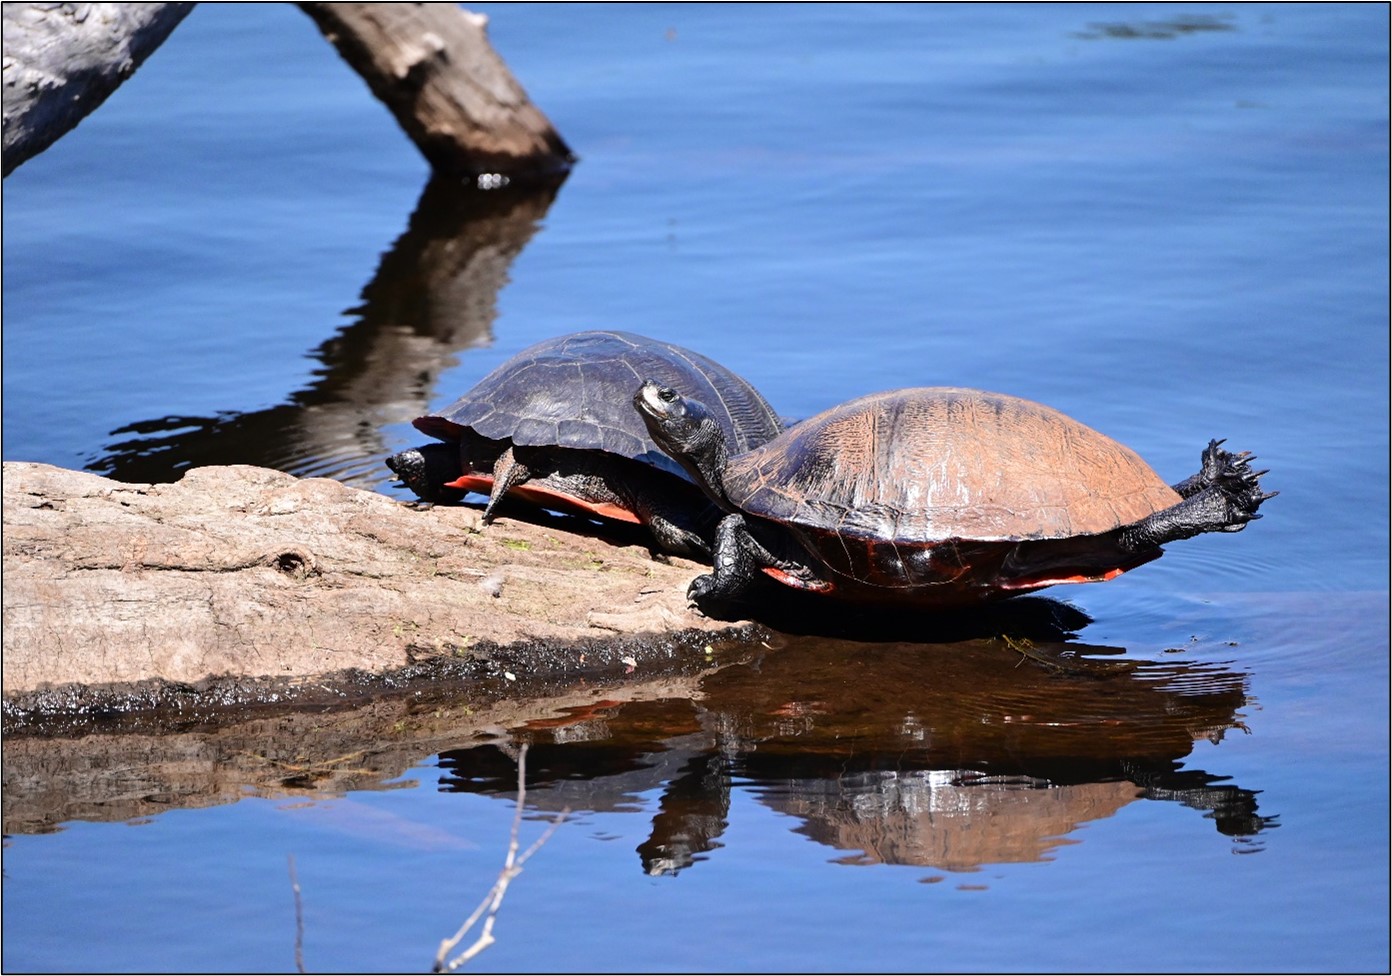 Pinelands Summer Short Course, turtles